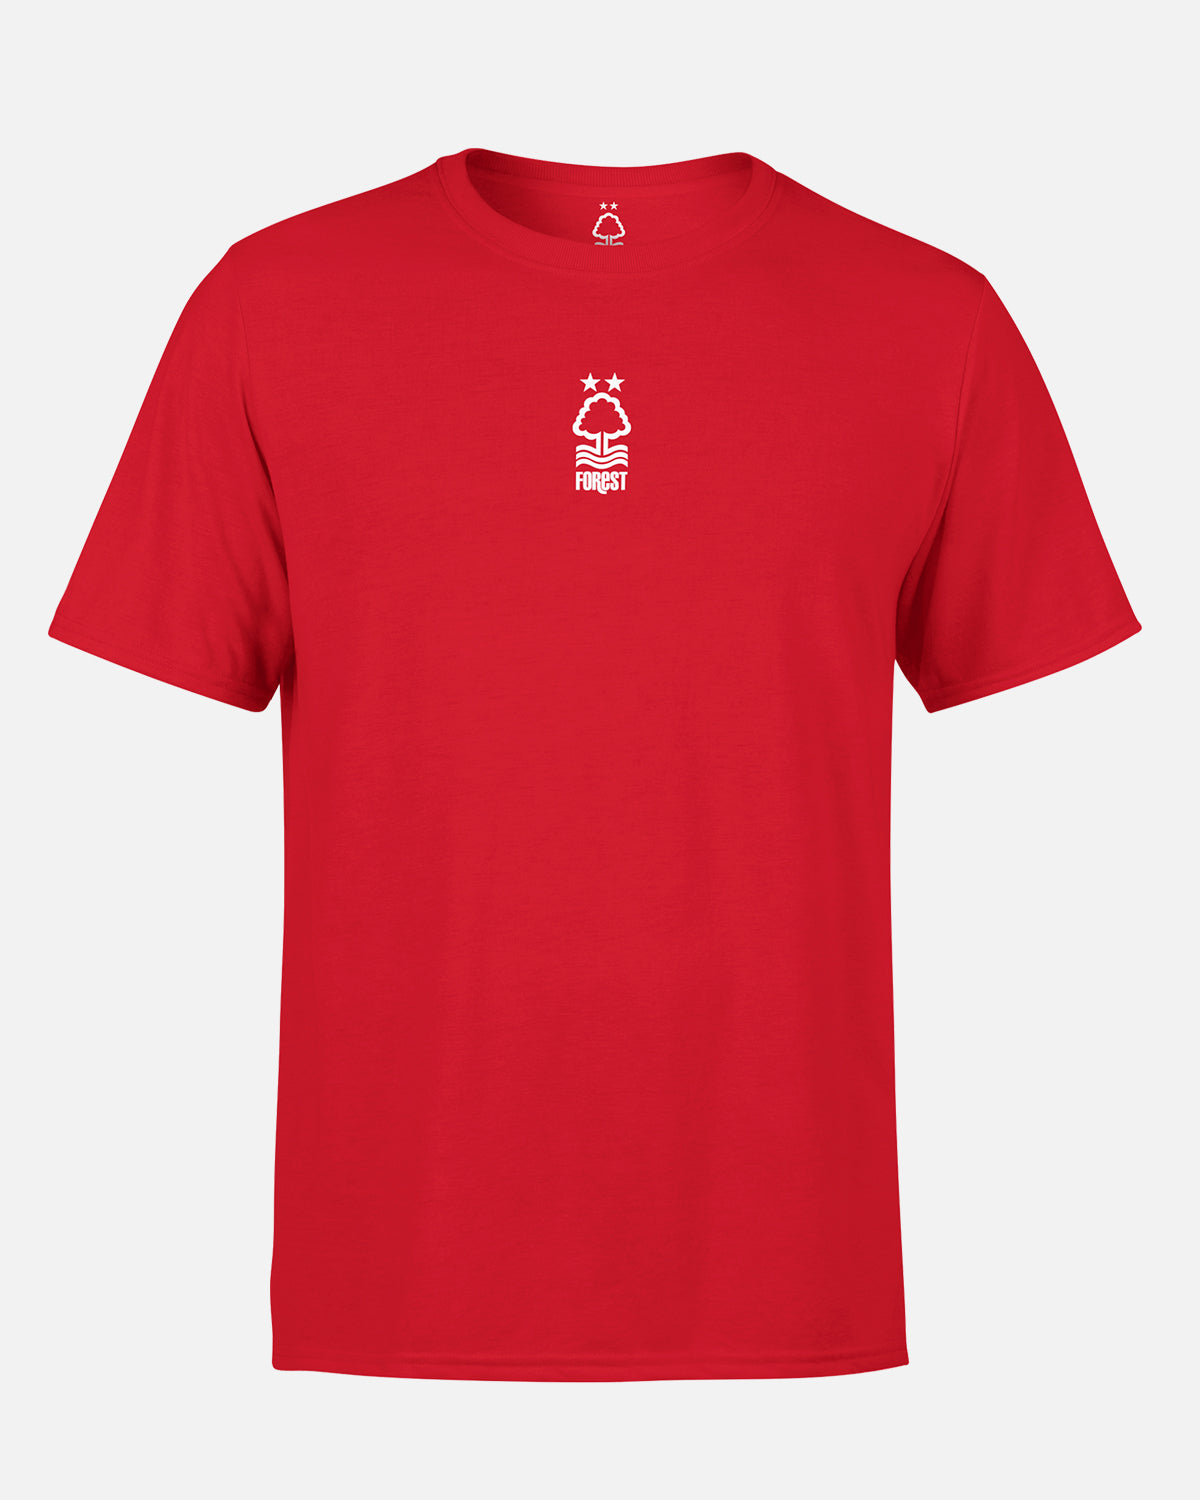 NFFC Red NOTTINGHAM Coordinates T-Shirt